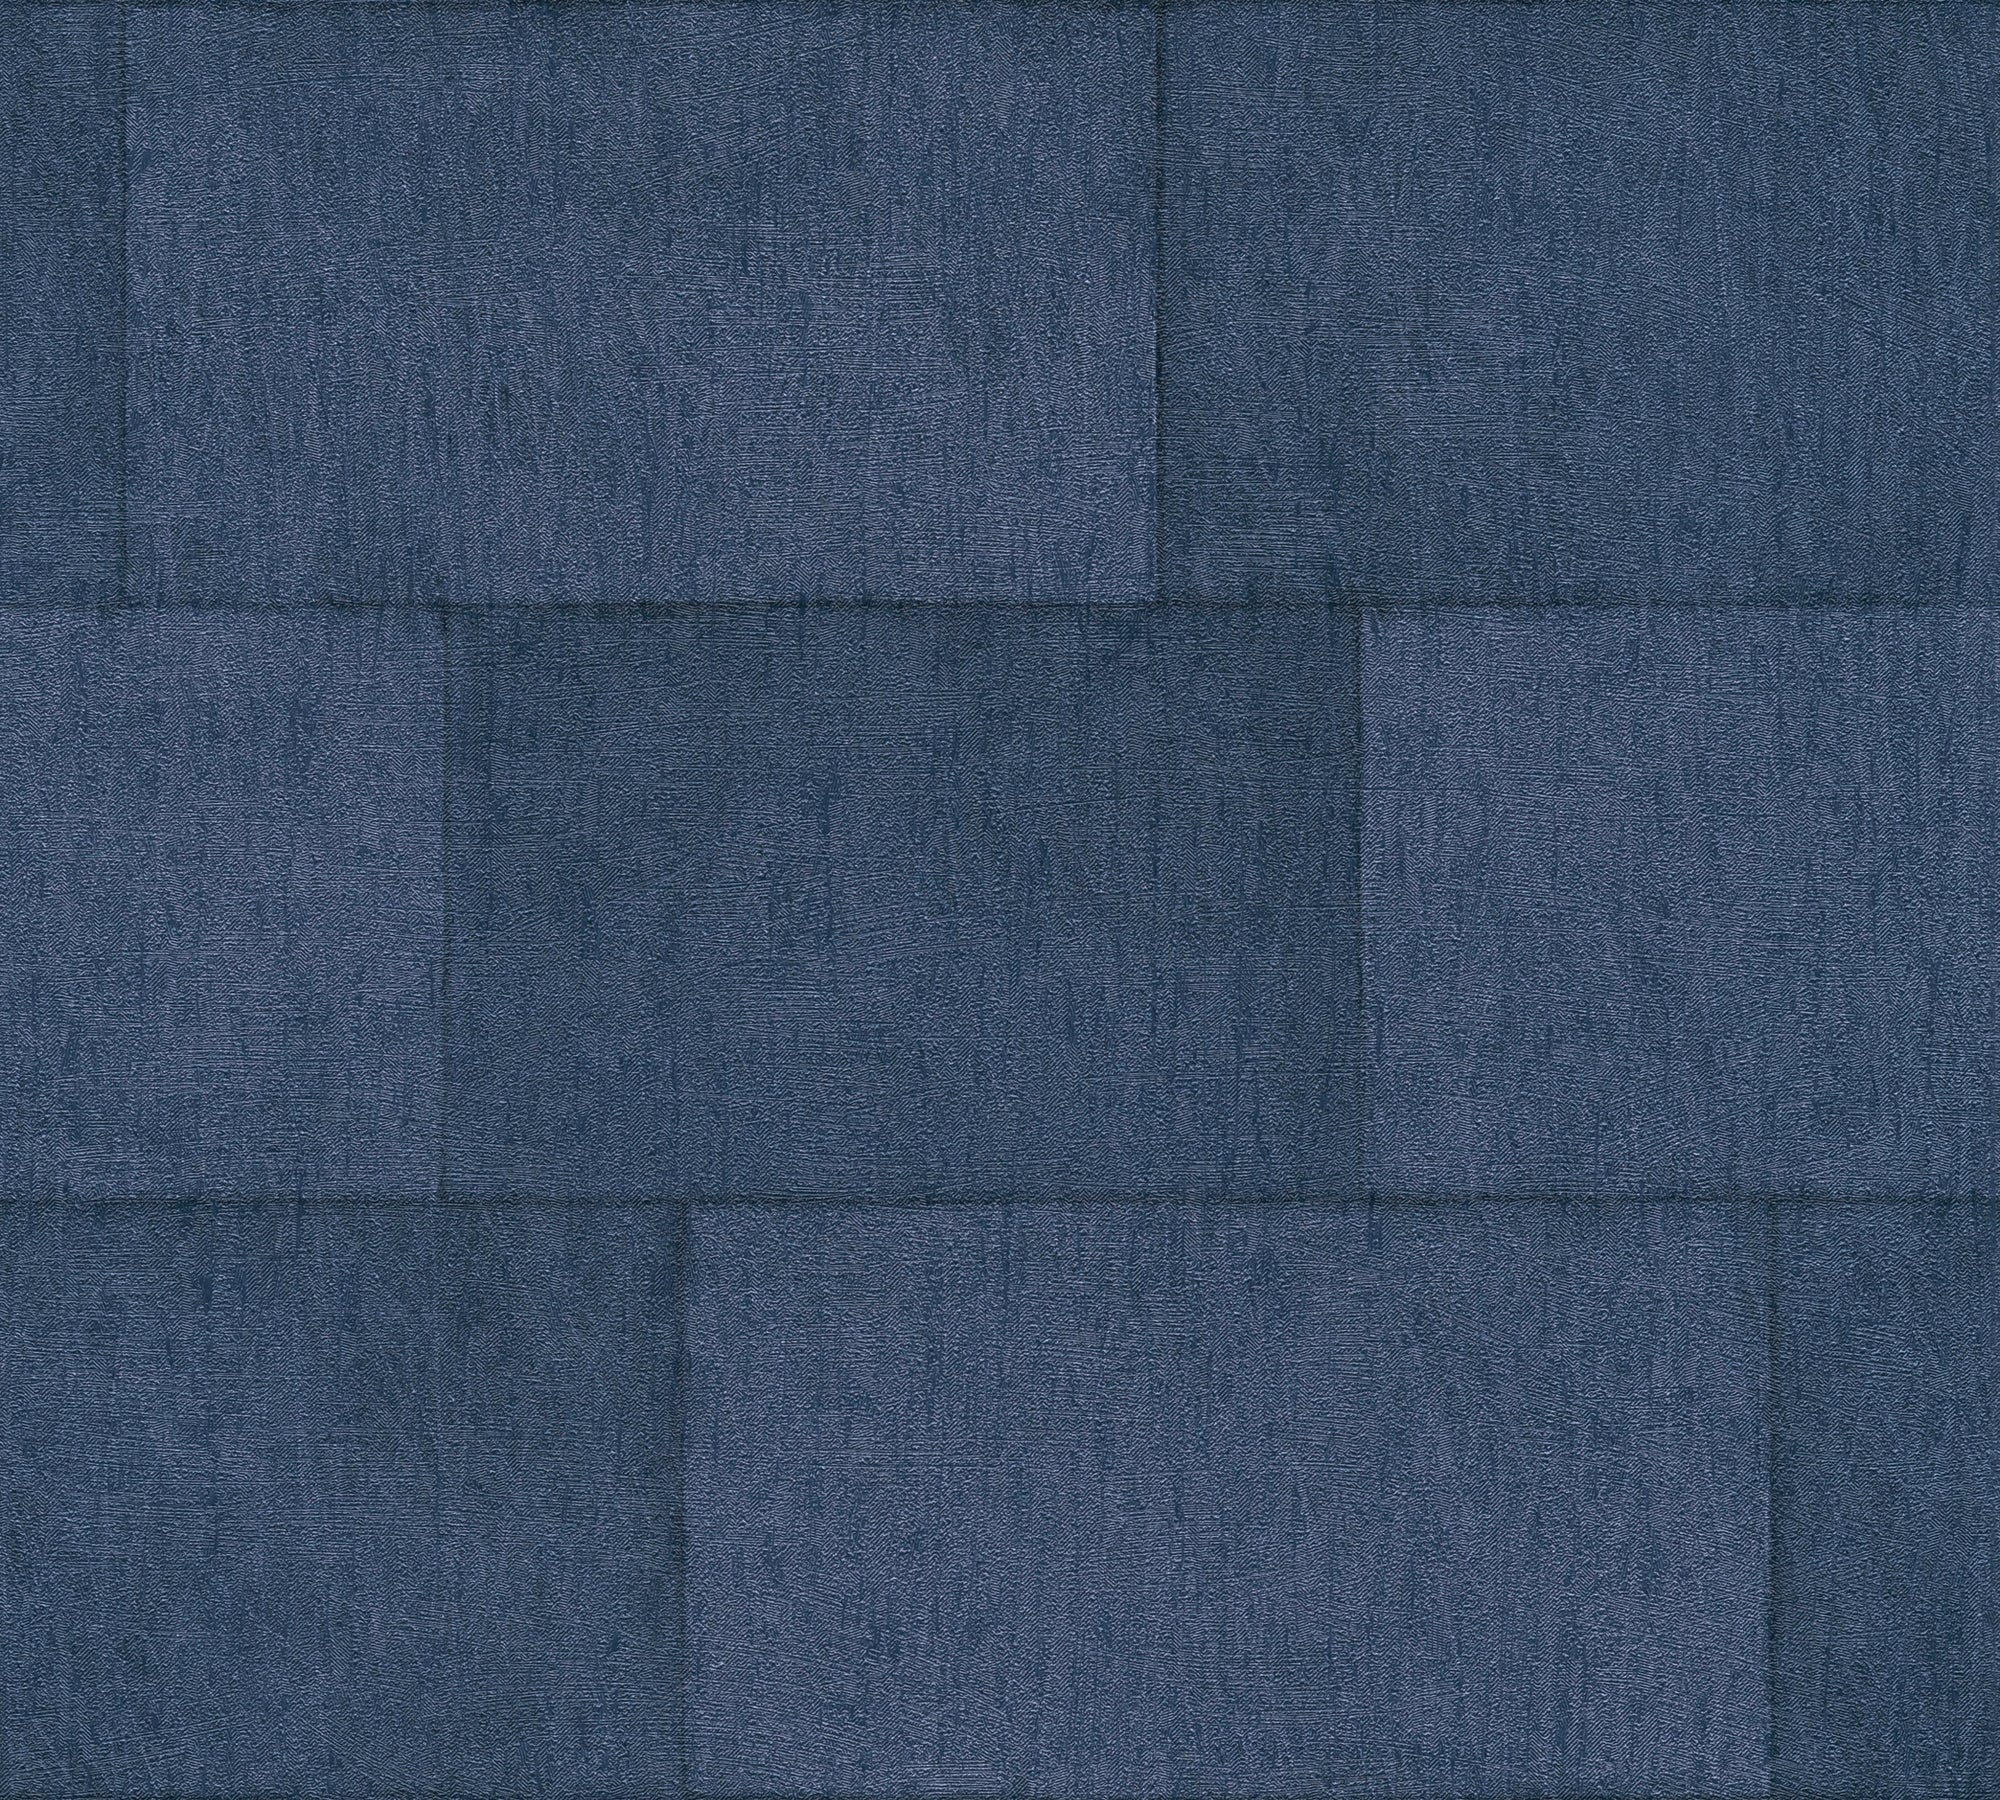 Titanium 3 - Tiles industrial wallpaper AS Creation Roll Blue  382015